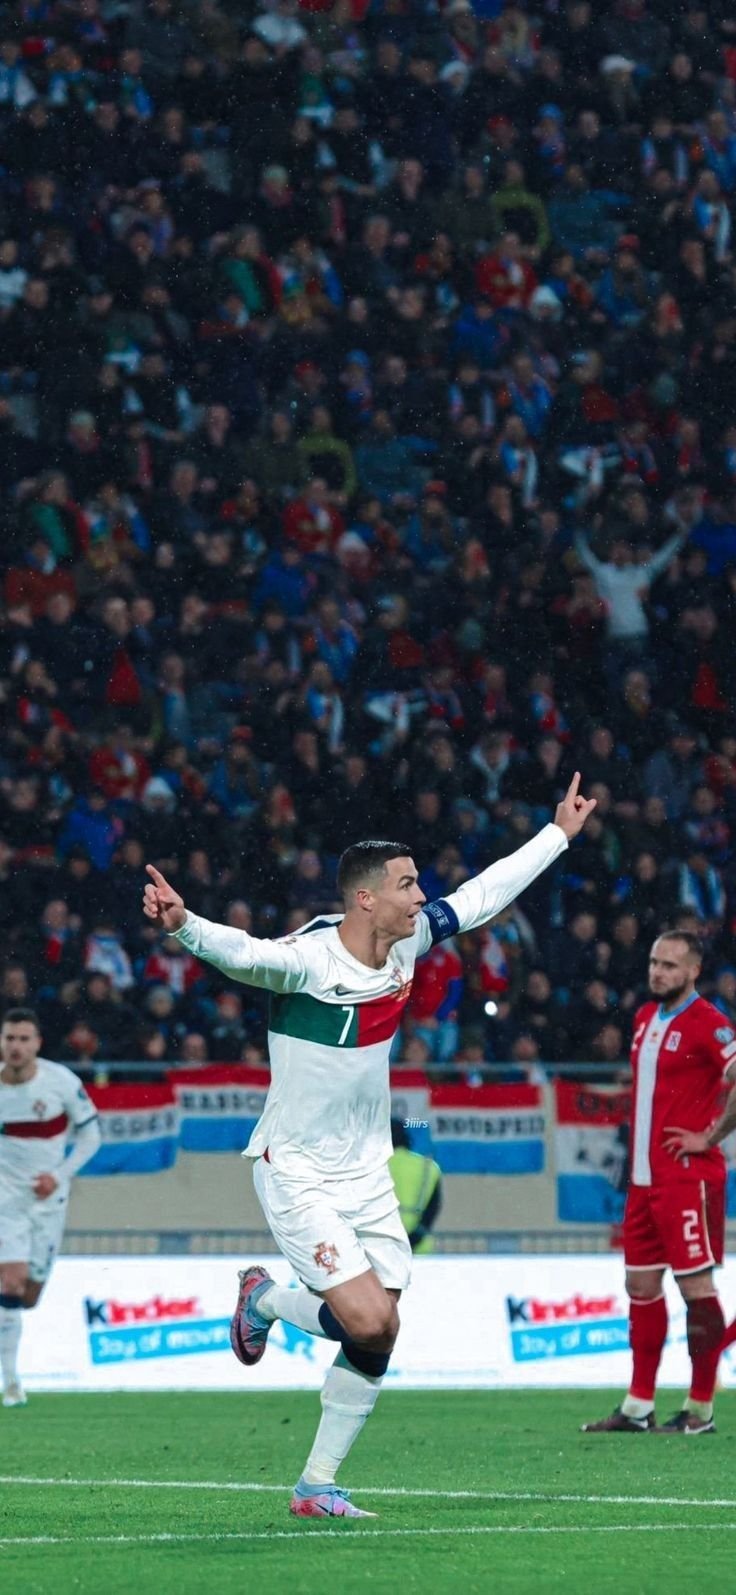 4K Ronaldo Wallpaper